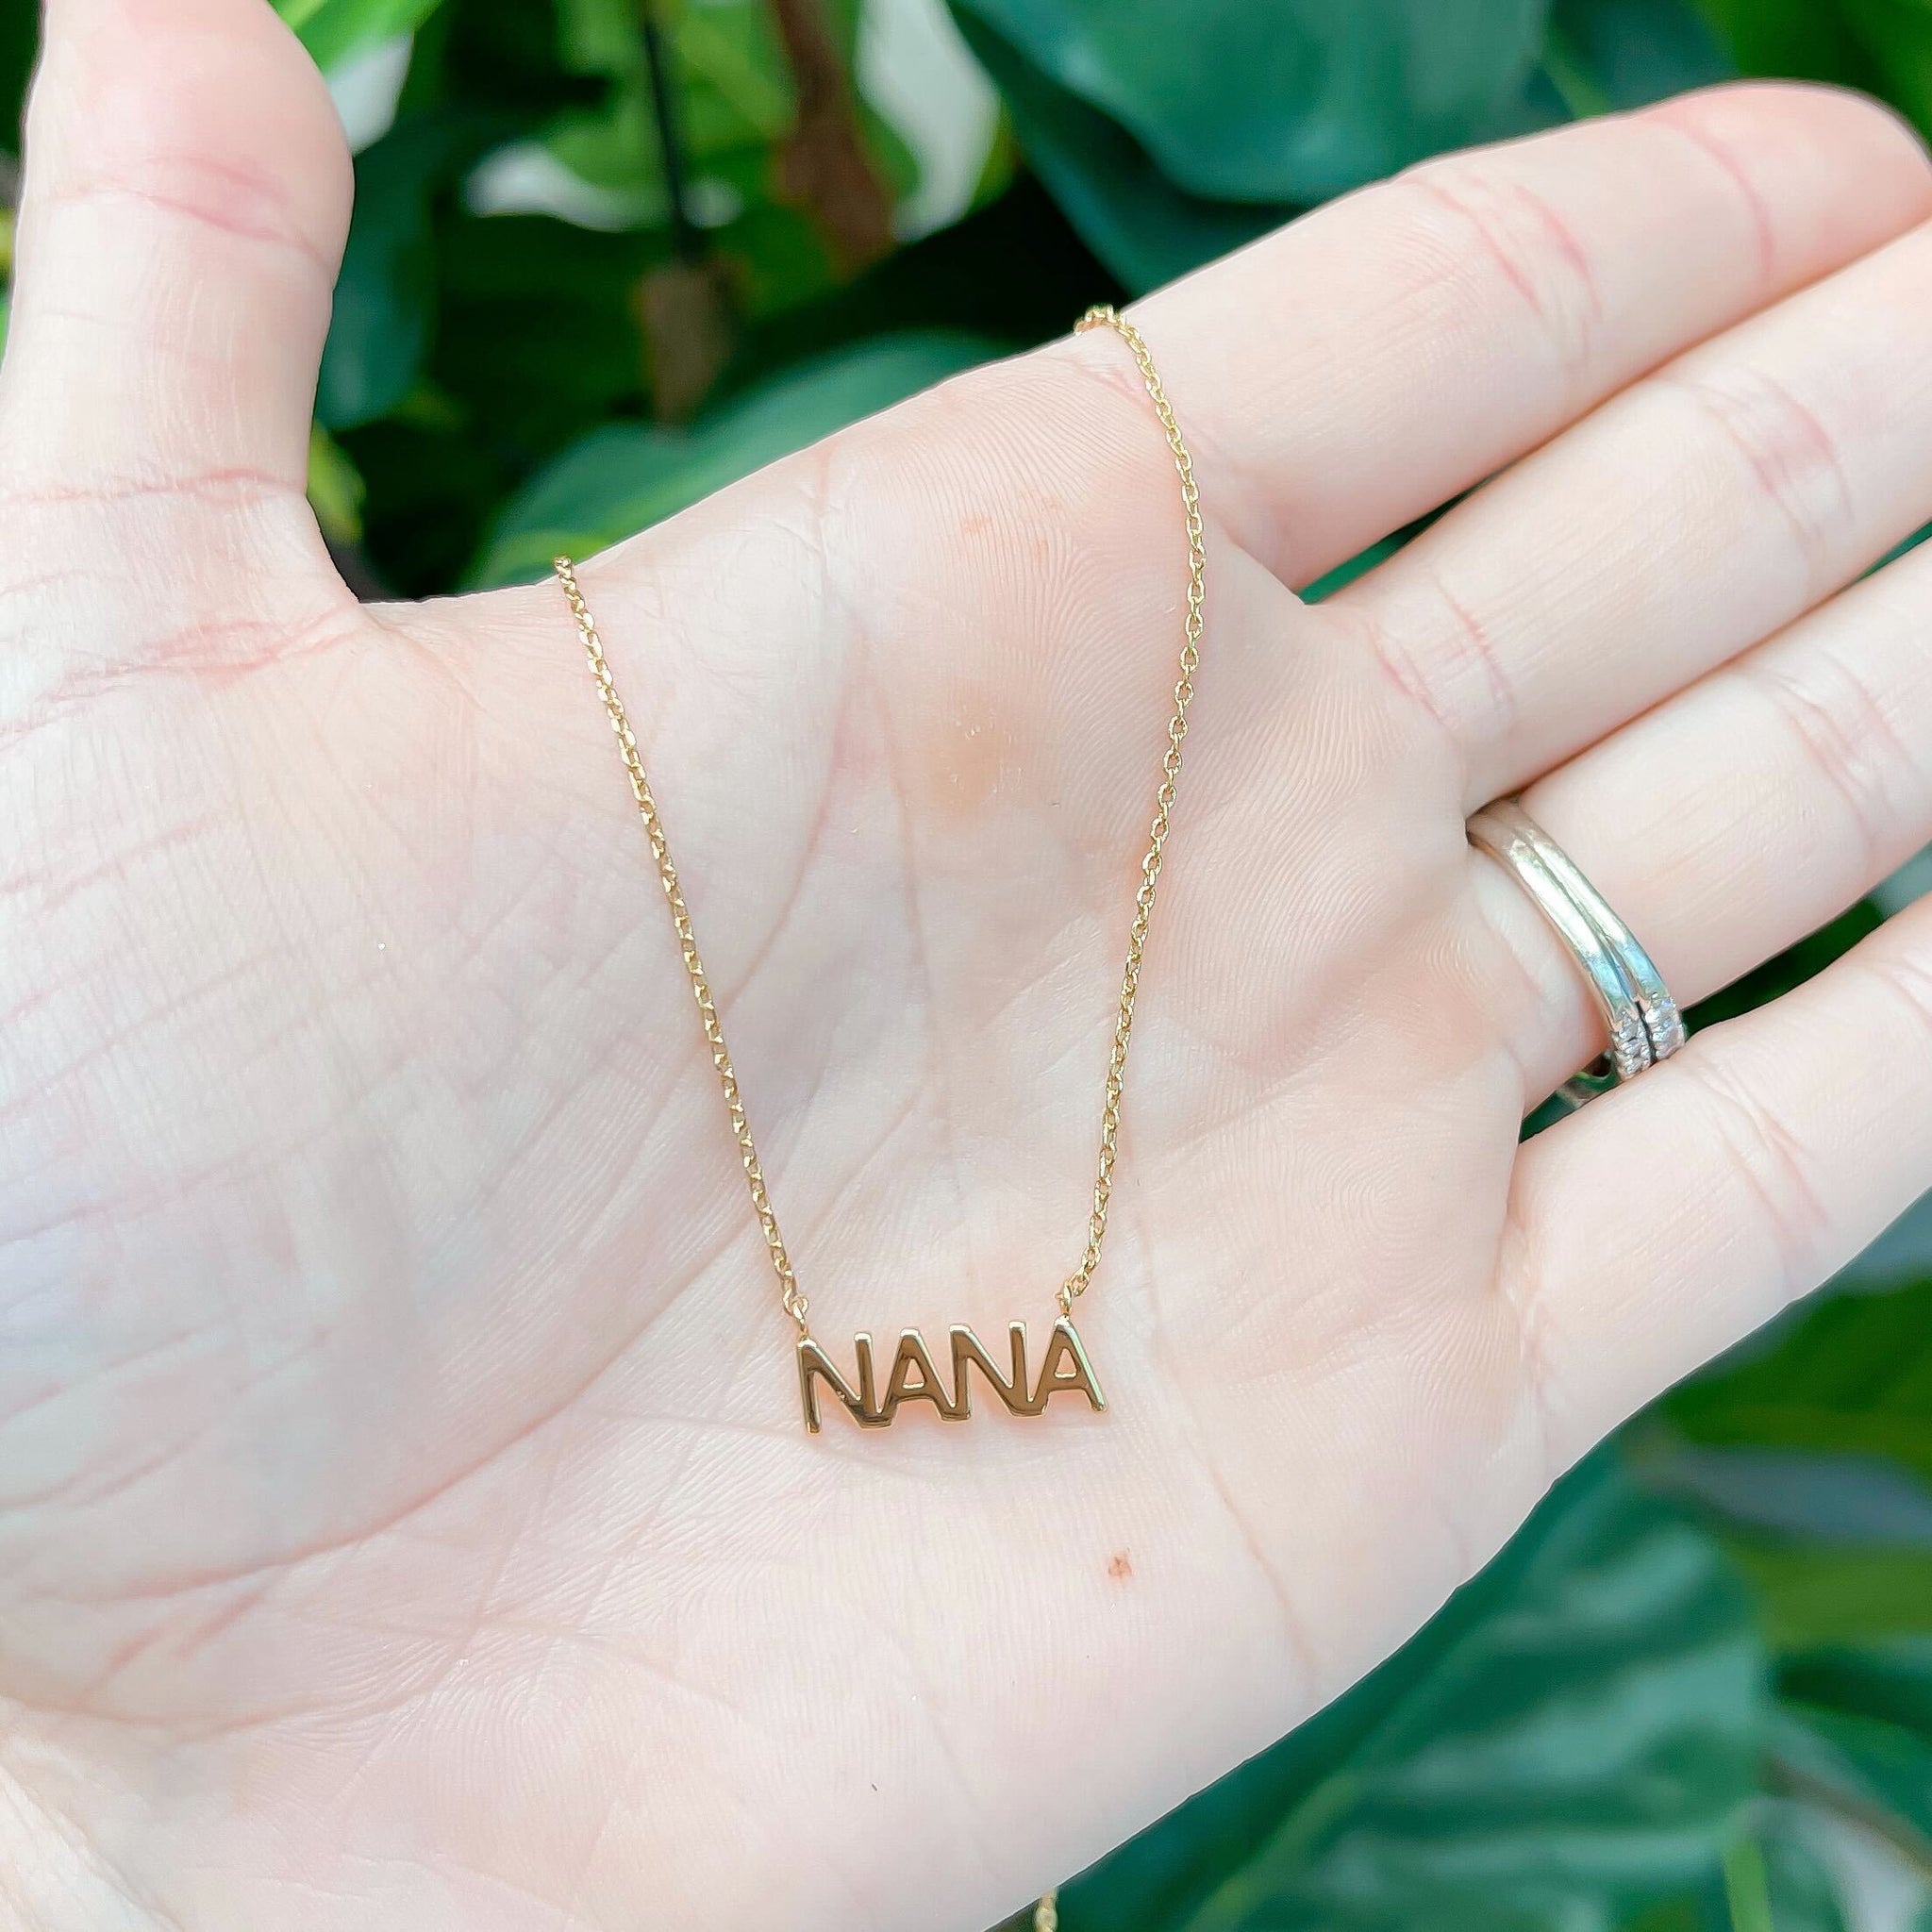 'NANA' Gold Pendant Necklace